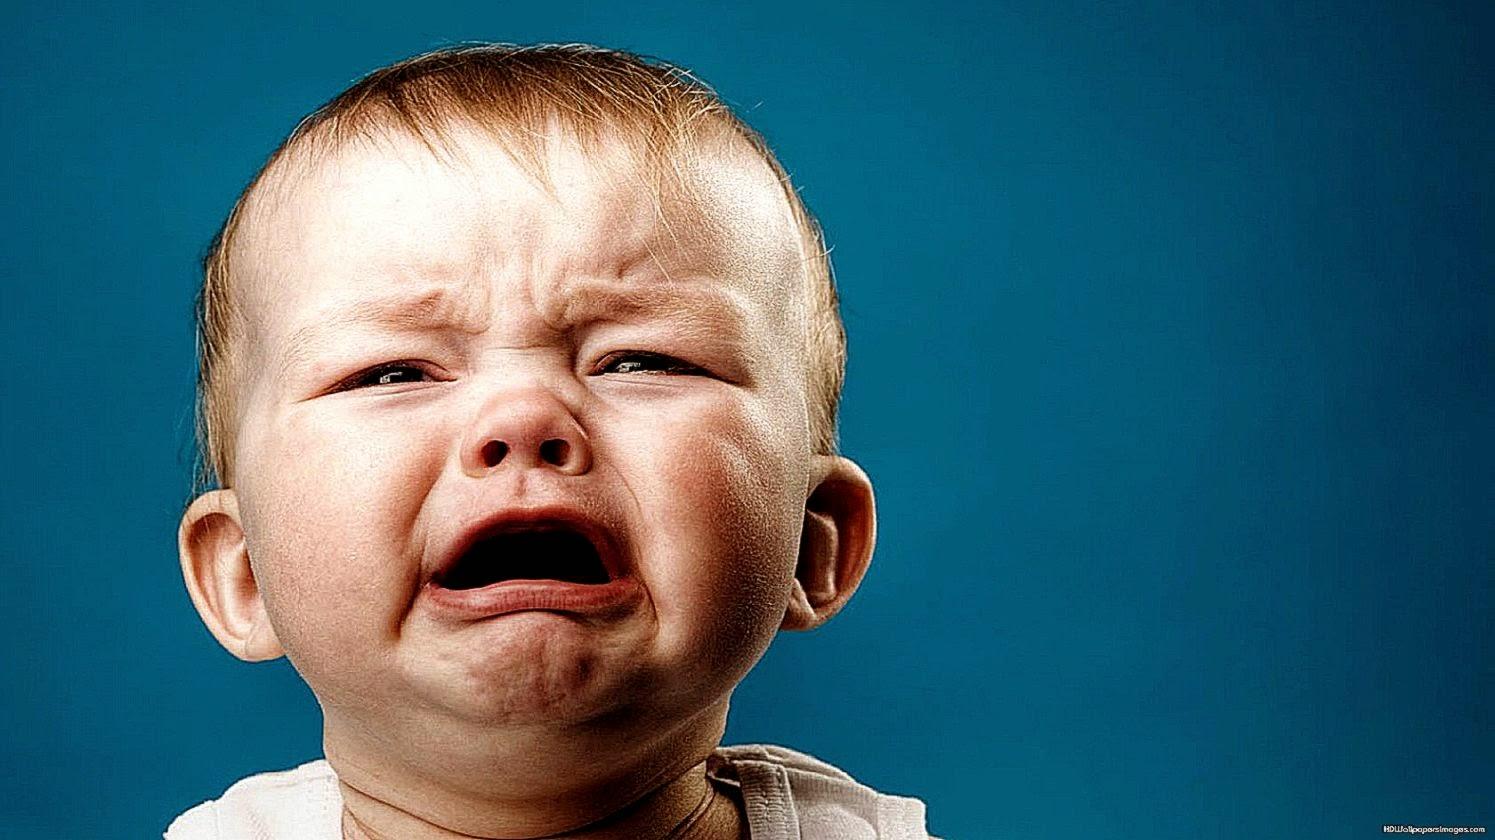 Crying Baby Sad Wallpaper HD Desktop